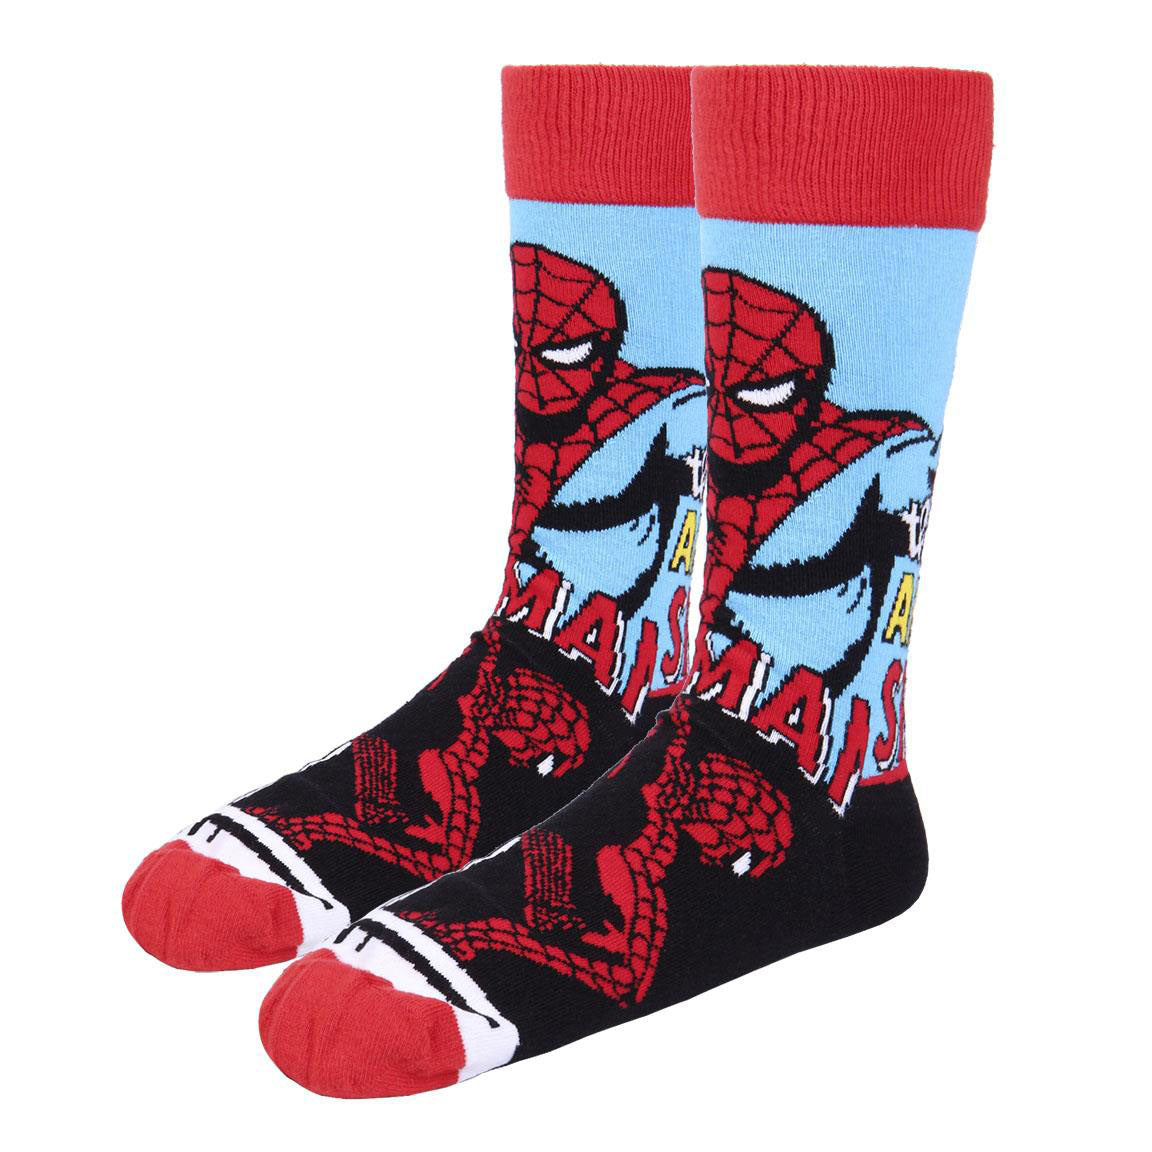 3 пари шкарпеток Marvel - Месники